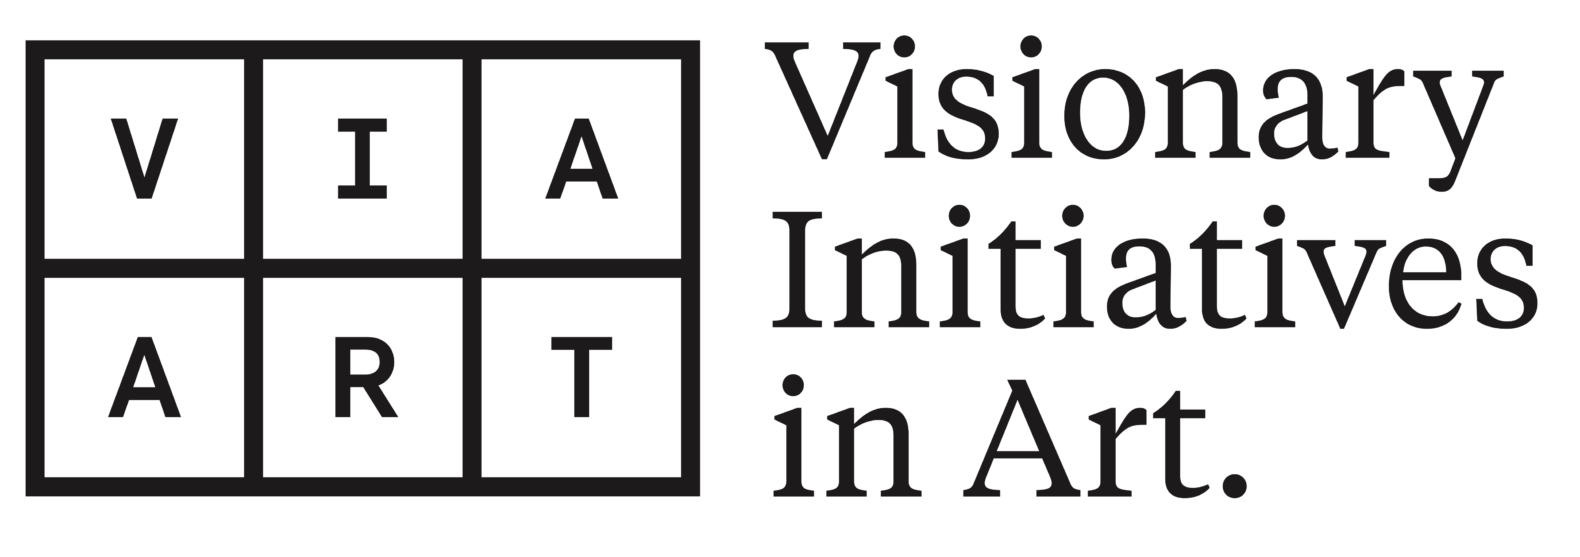 Visionary Initiatives in Art logo